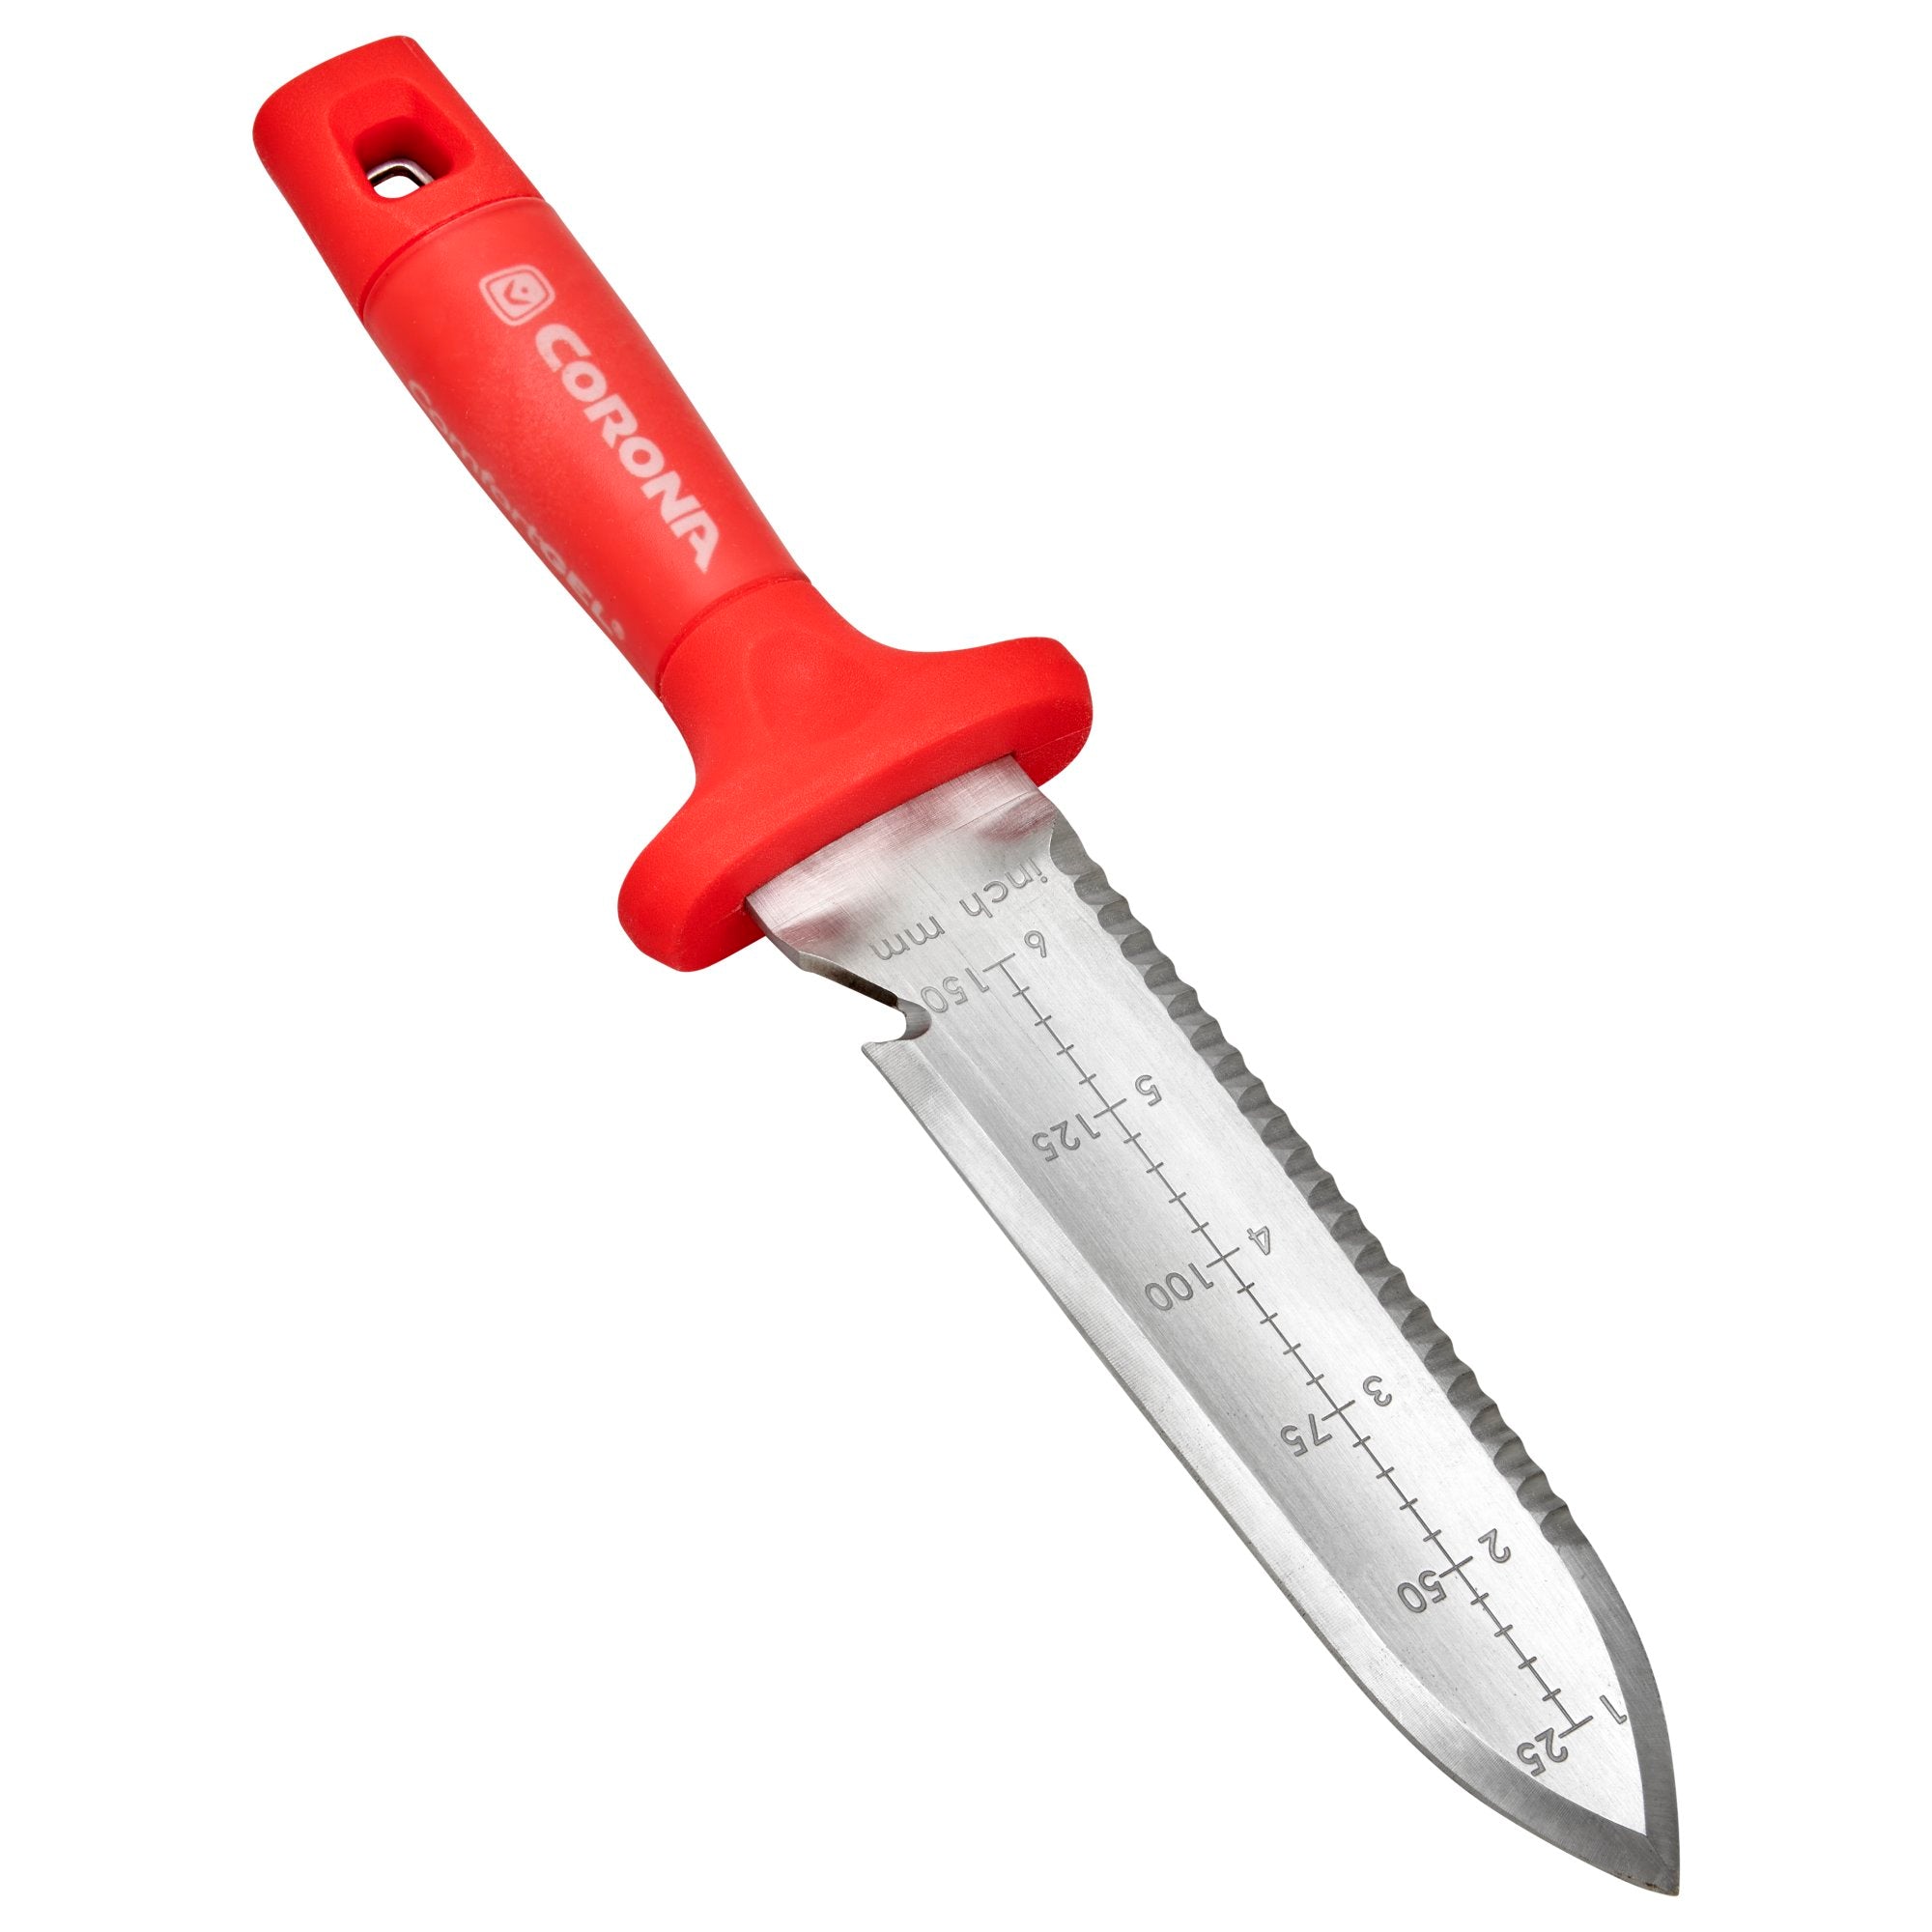 Hori Hori Garden Knife with ComfortGEL® Grip